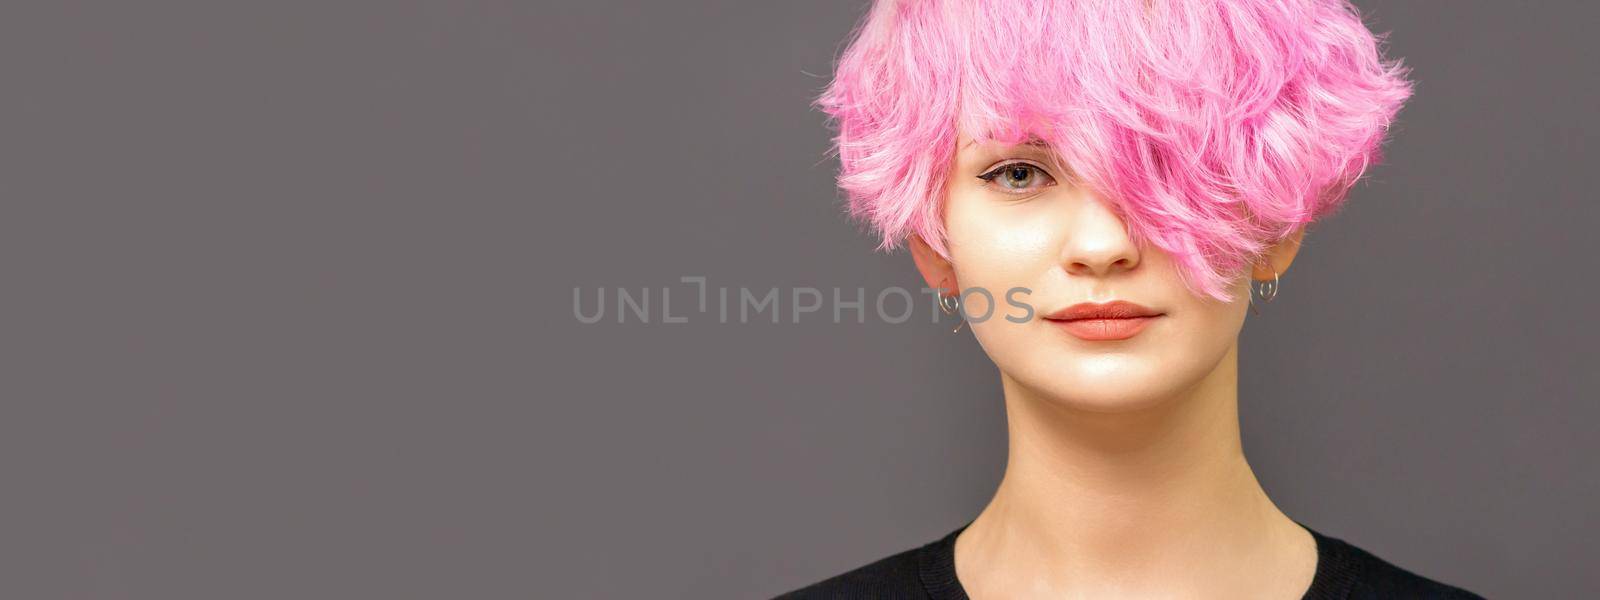 Young woman with pink hair by okskukuruza